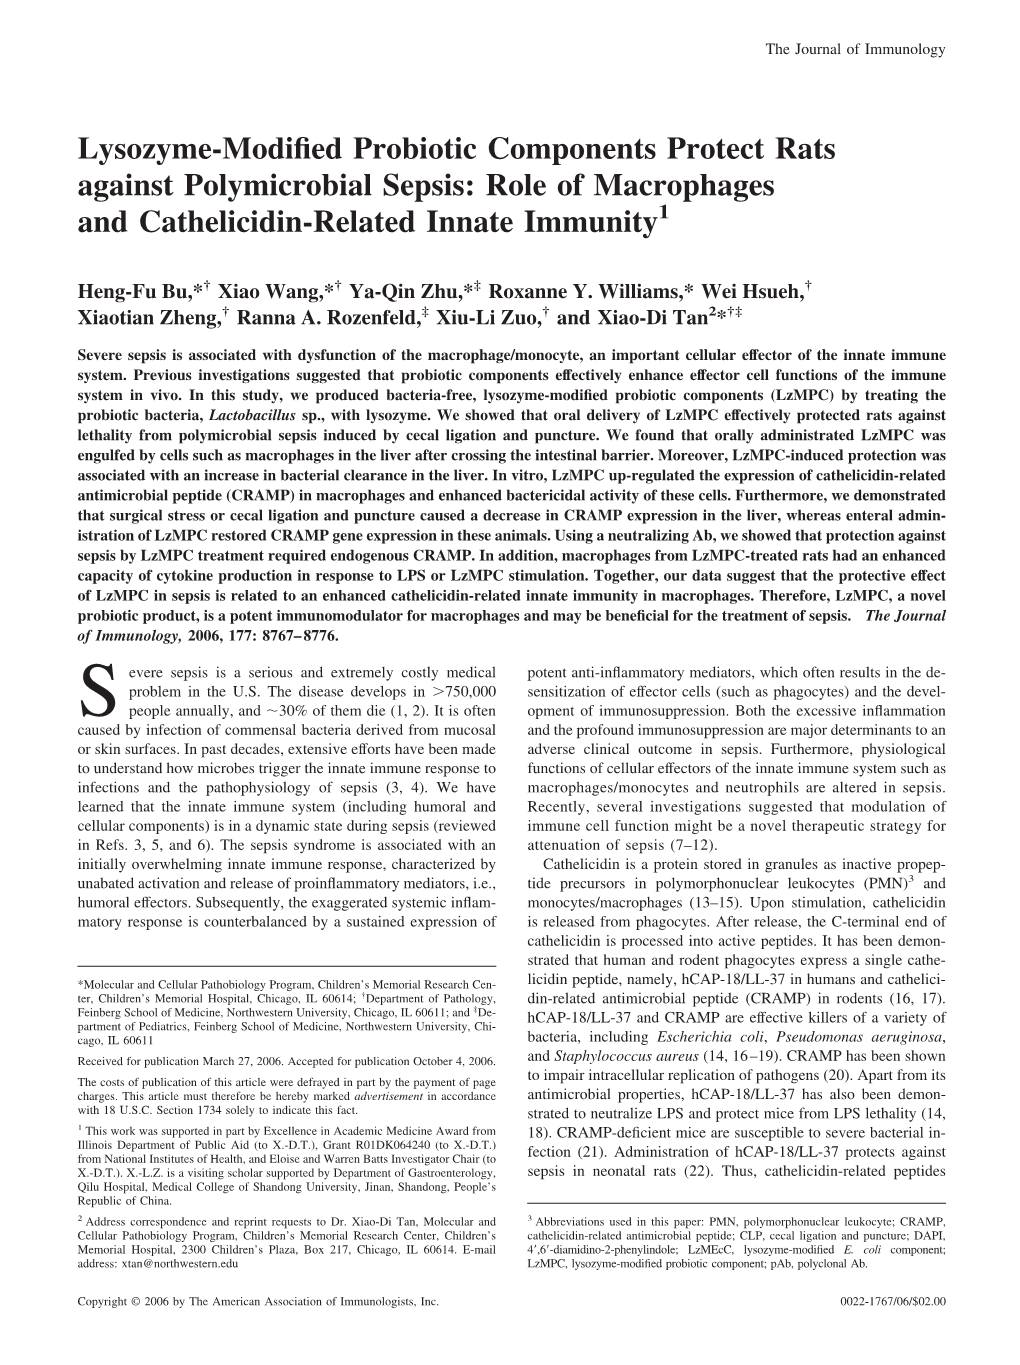 Cathelicidin-Related Innate Immunity Role